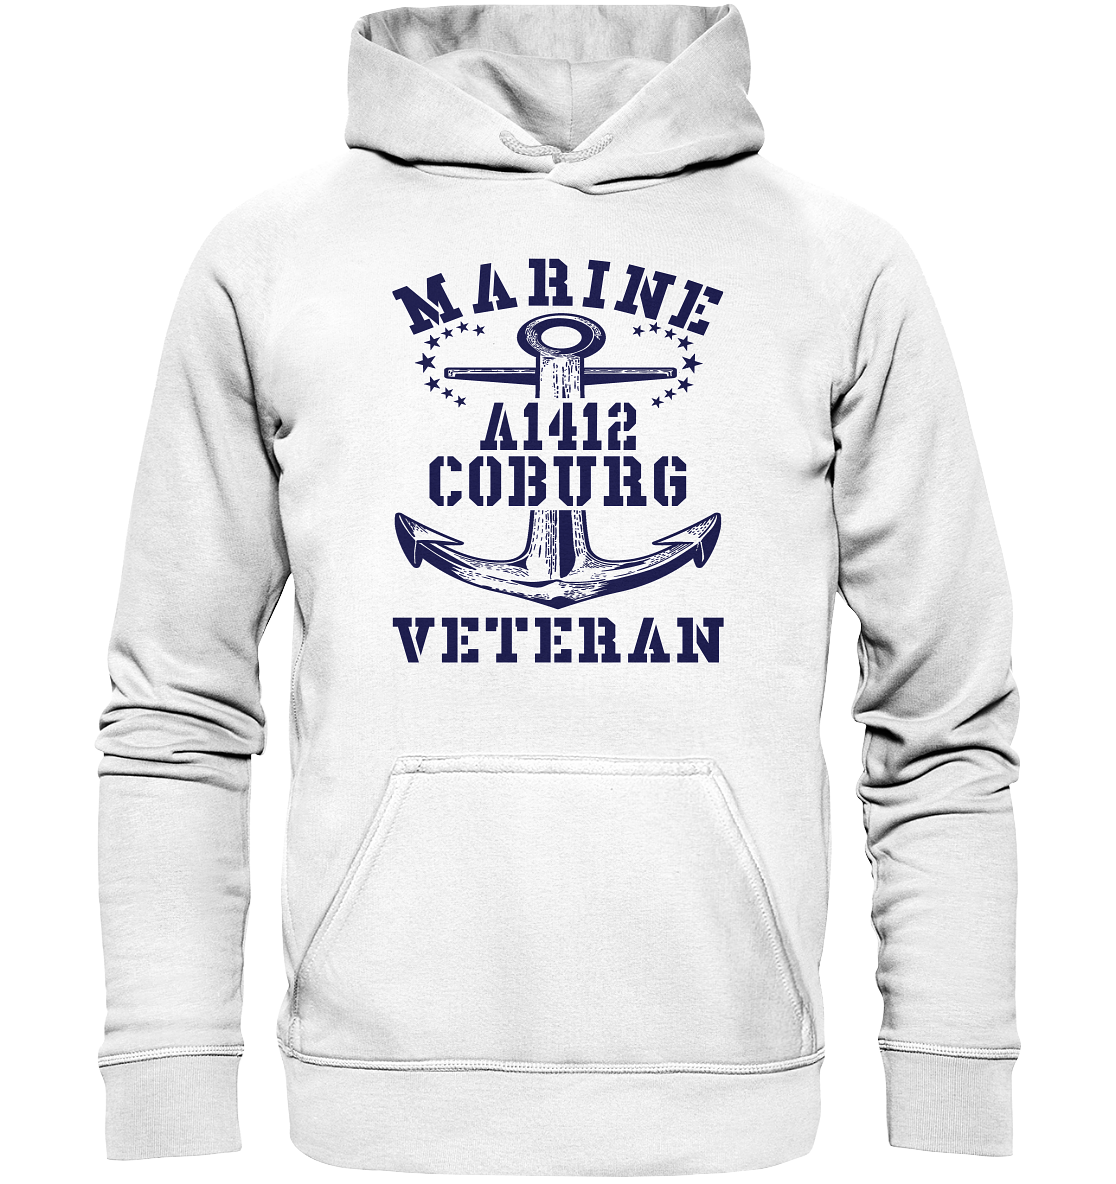 Troßschiff A1412 COBURG Marine Veteran  - Basic Unisex Hoodie